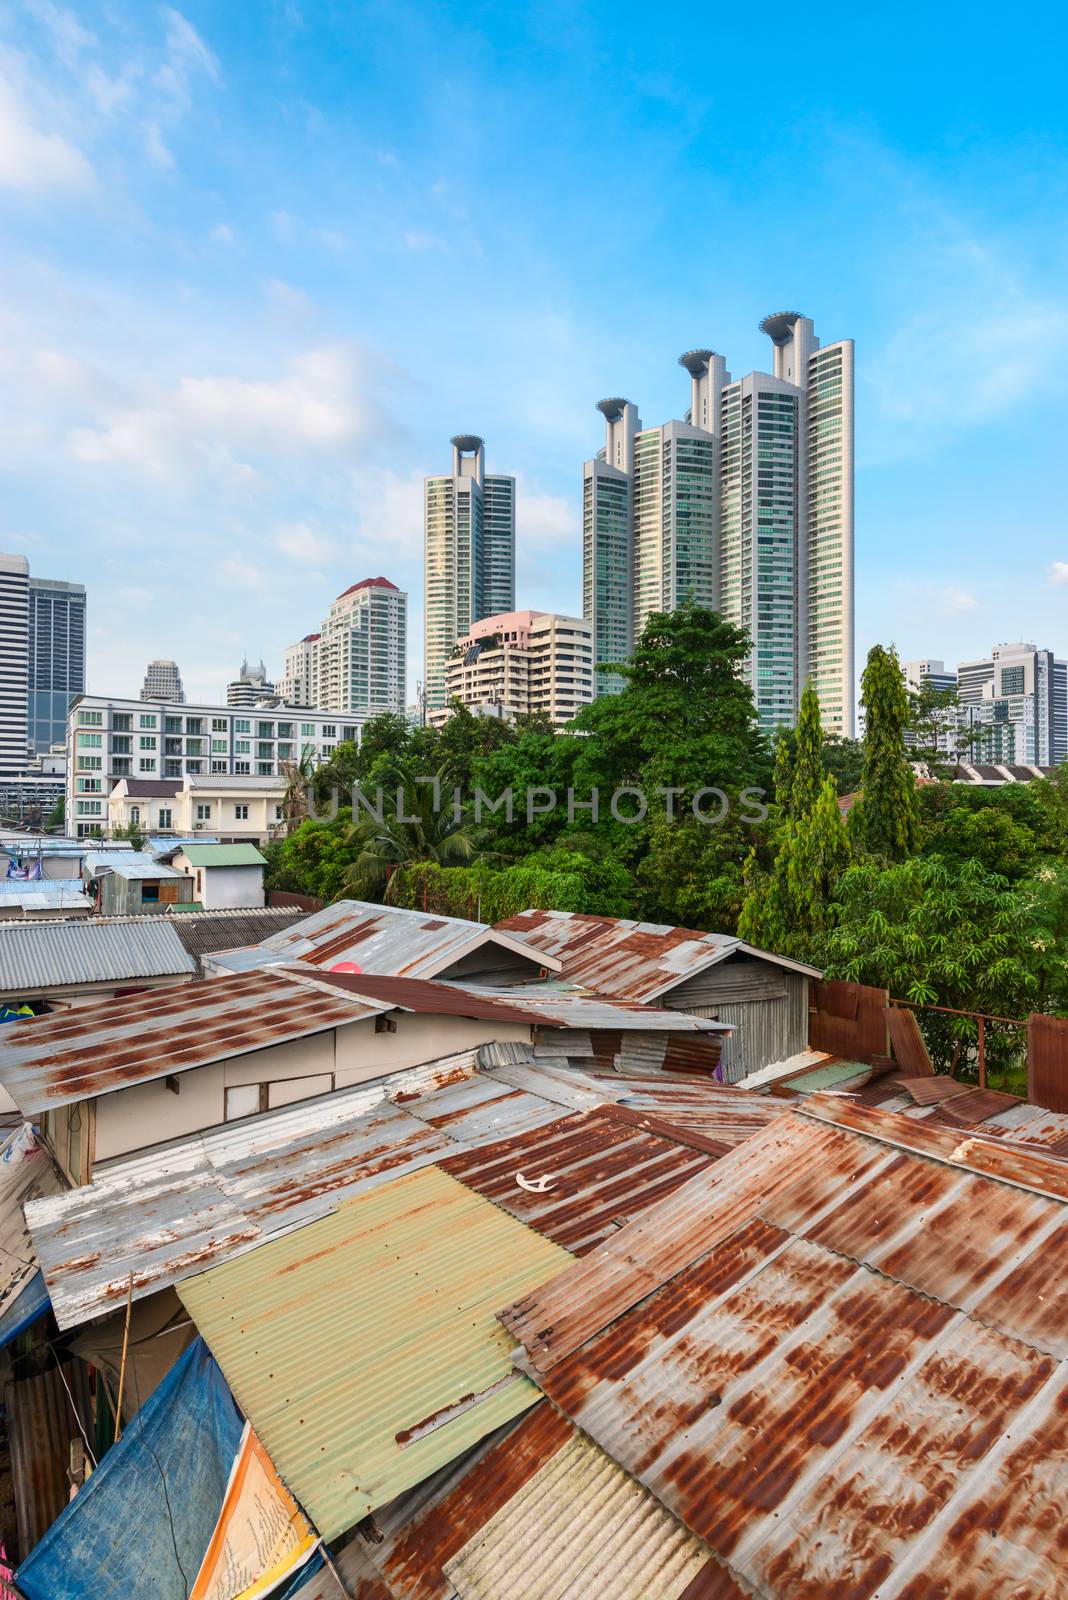 Modern asian city discord with shacks and skyscrapers by iryna_rasko